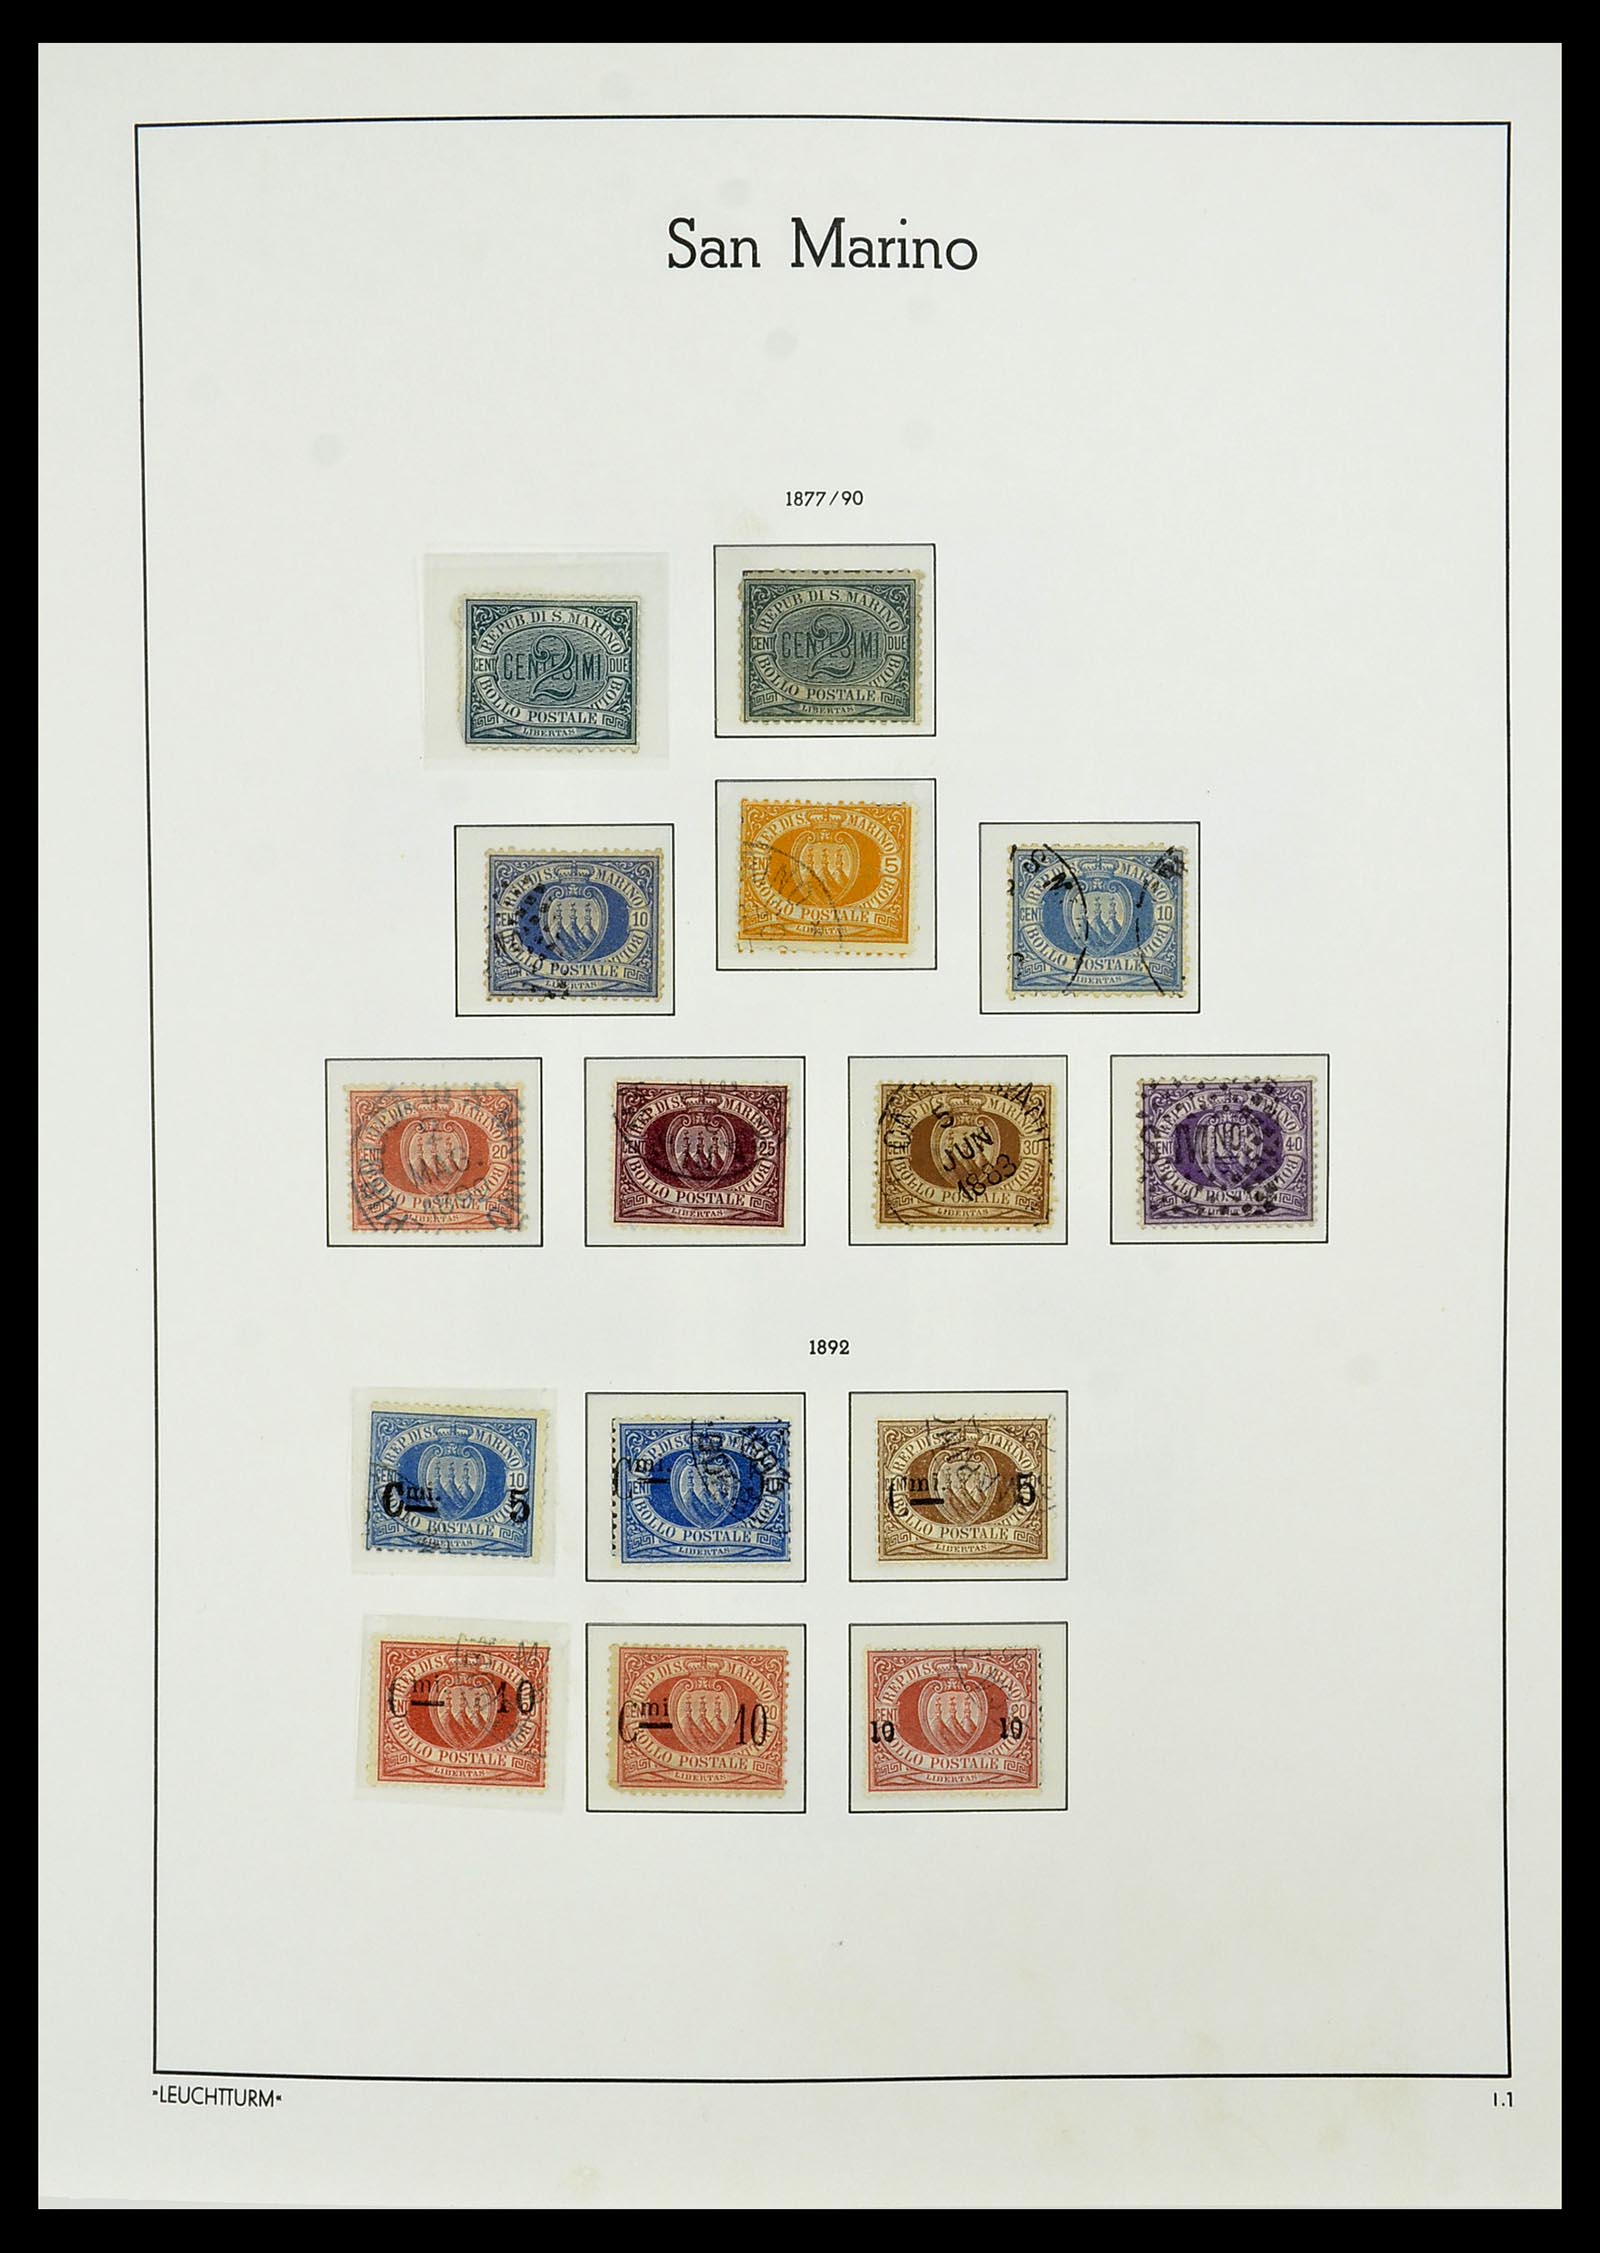 34243 001 - Stamp collection 34243 San Marino 1877-2008.